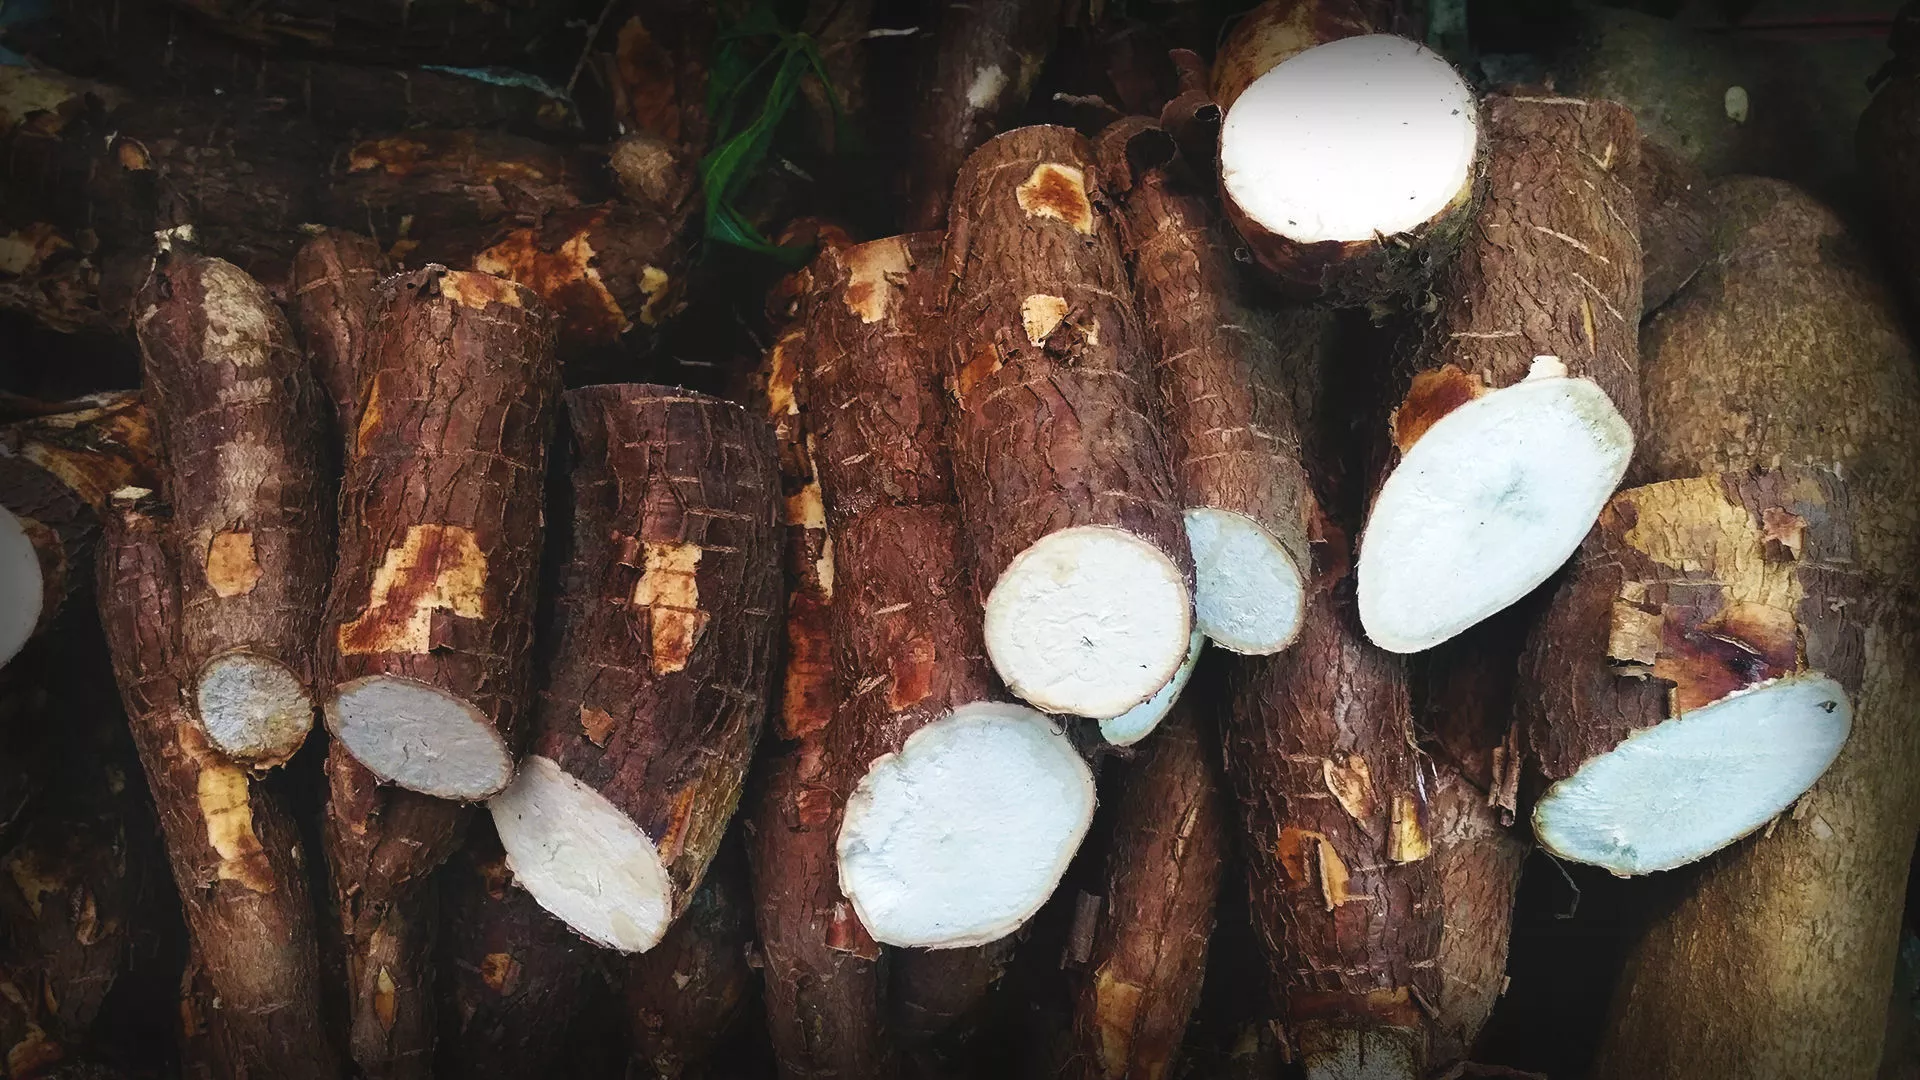 Cassava Planters Suppliers, Best Cassava Machines from Brazil, Mechanized Cassava Planters